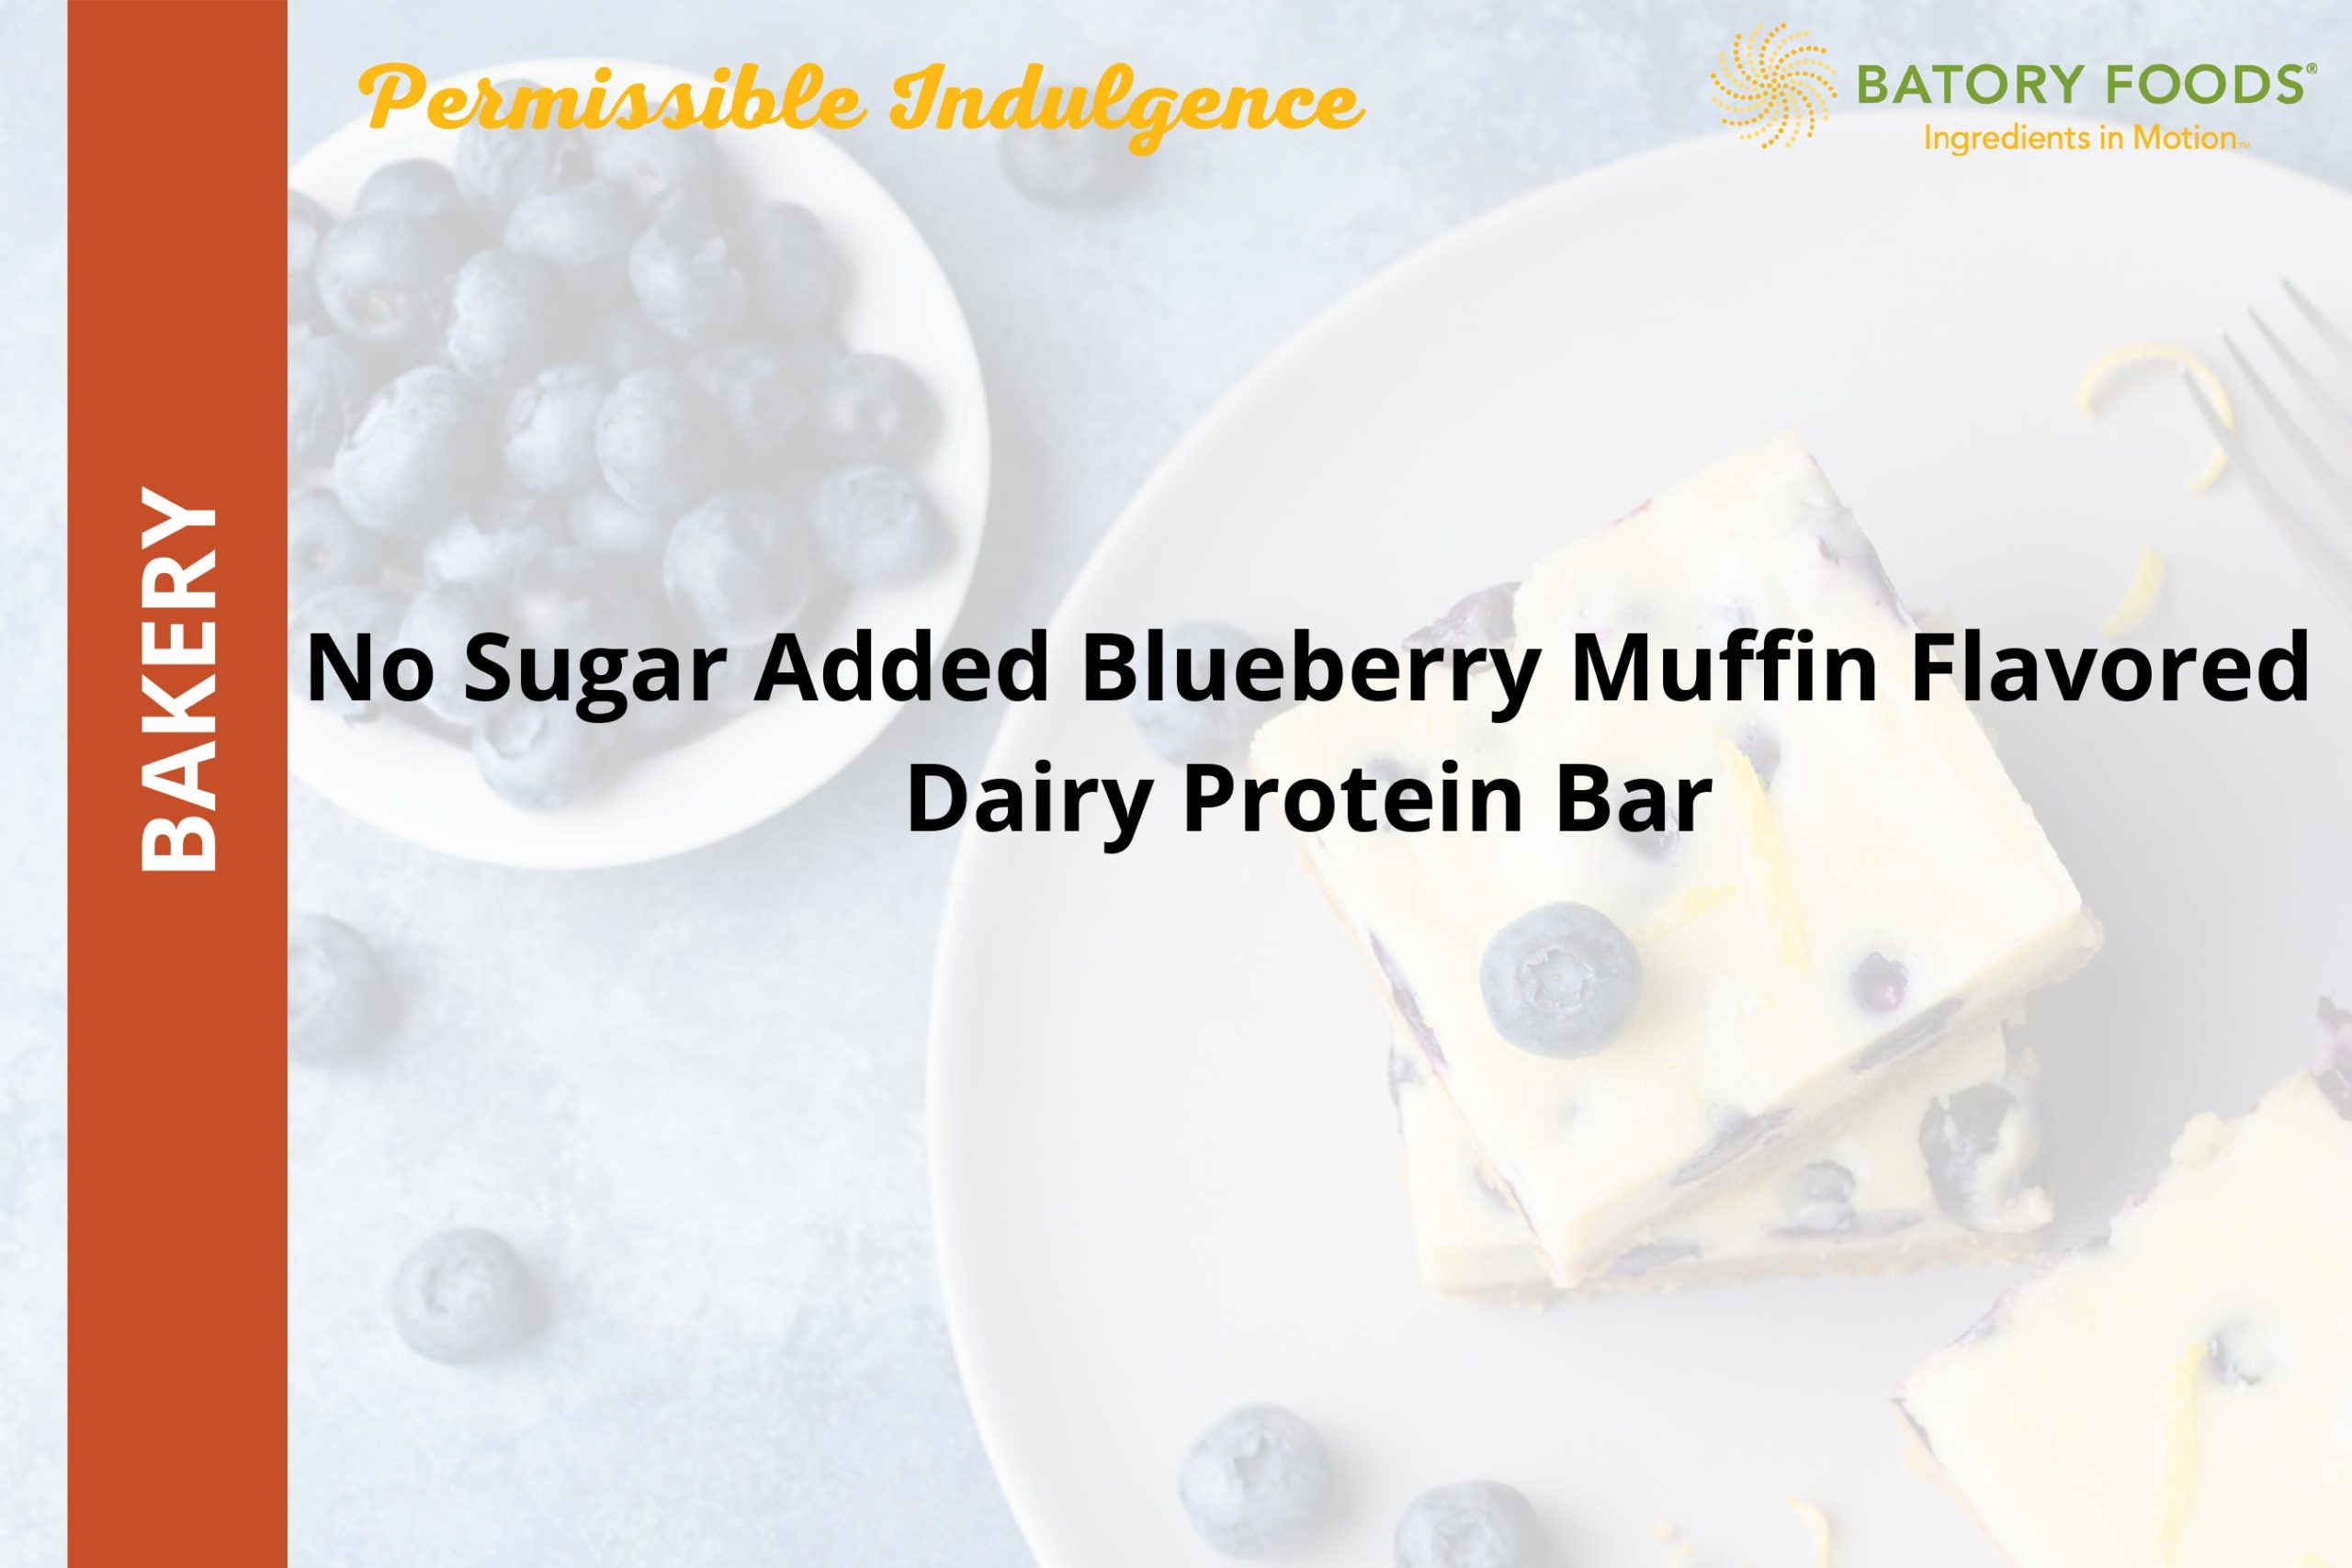 No Sugar Added Blueberry Muffin Flavored Dairy Protein Bar